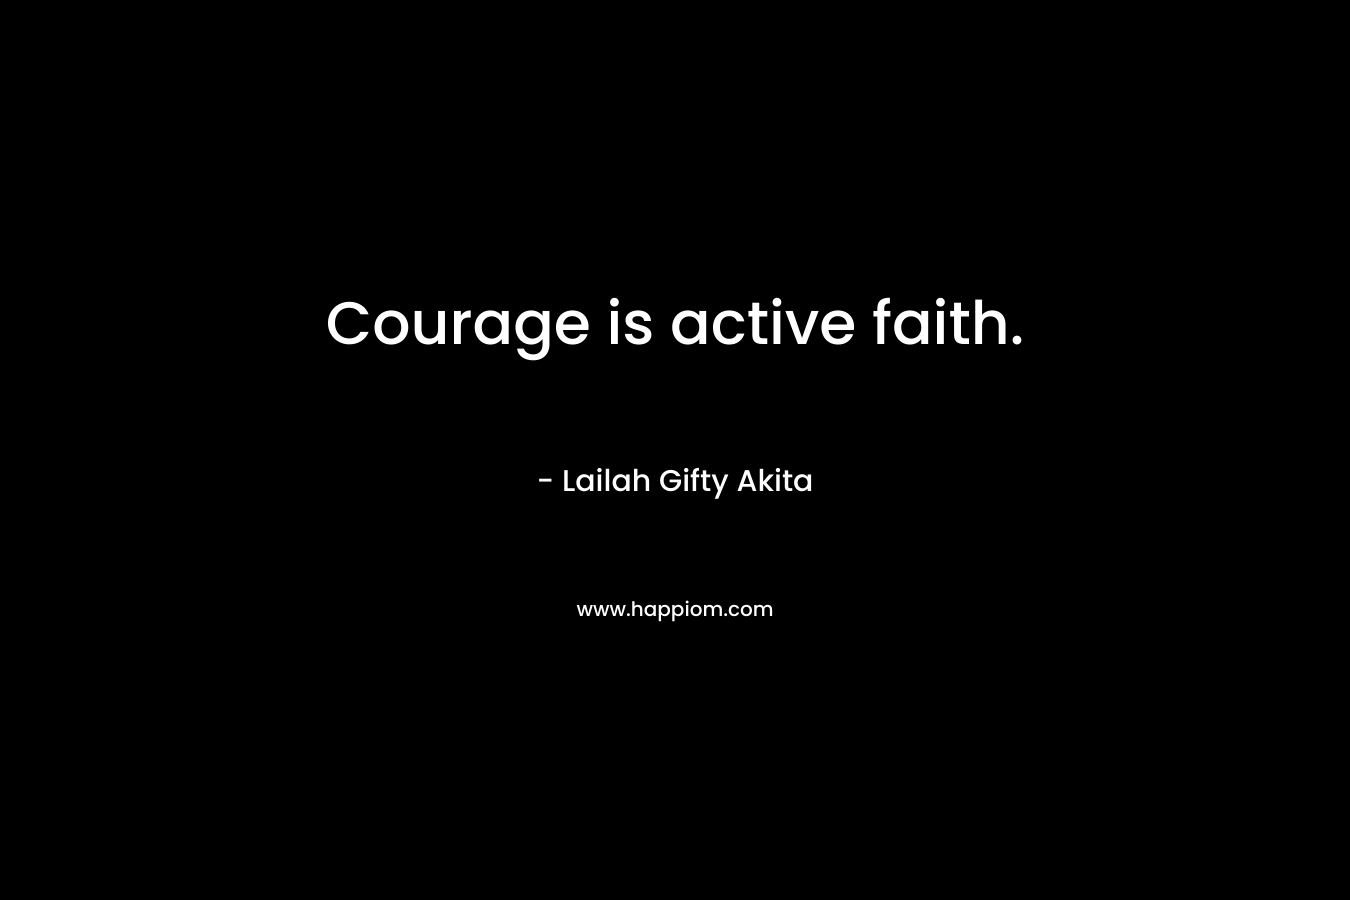 Courage is active faith.